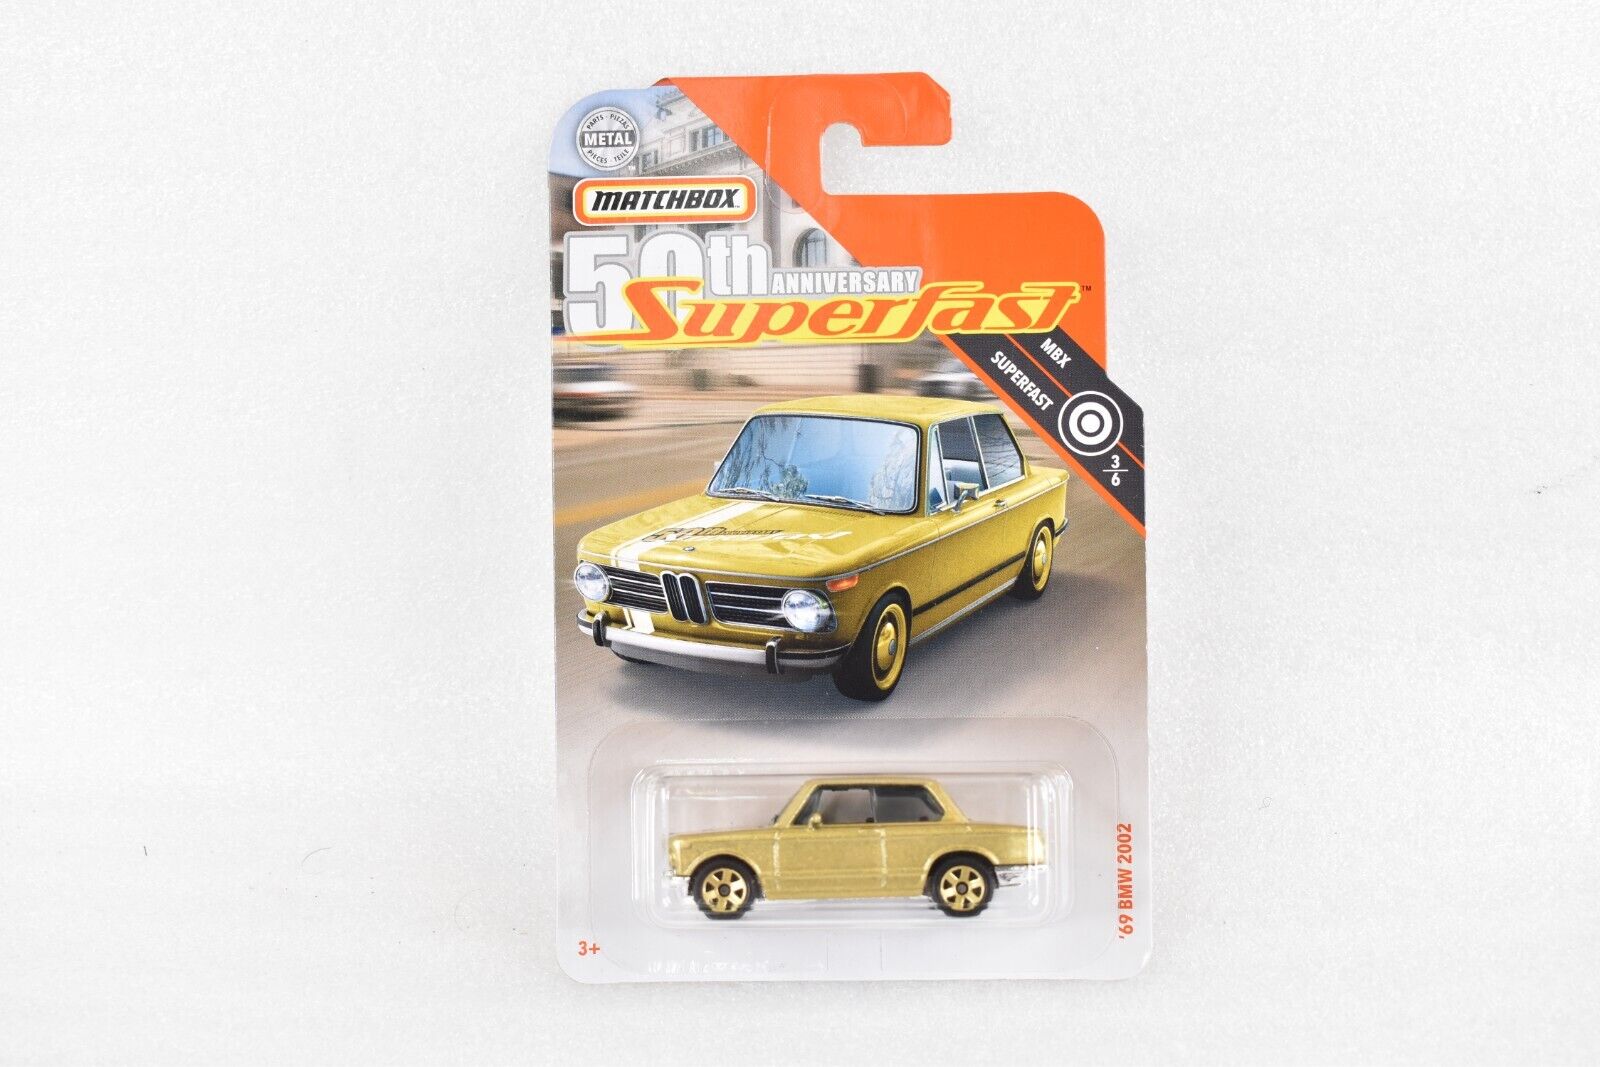 Matchbox ‘69 1969 BMW 2002 50th Anniversary Superfast Gold Series 2019